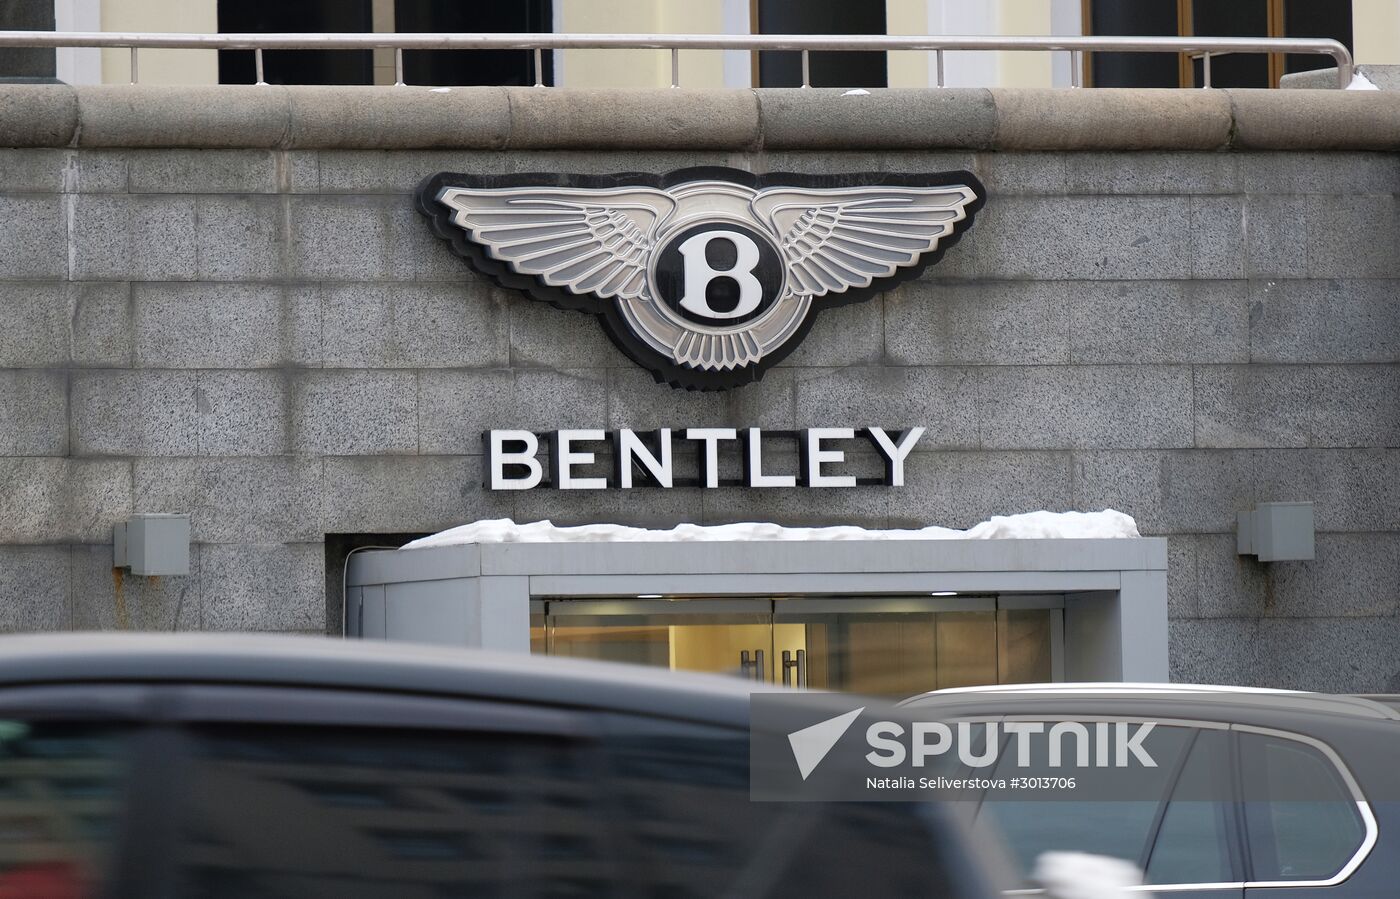 Bentley car salon sign